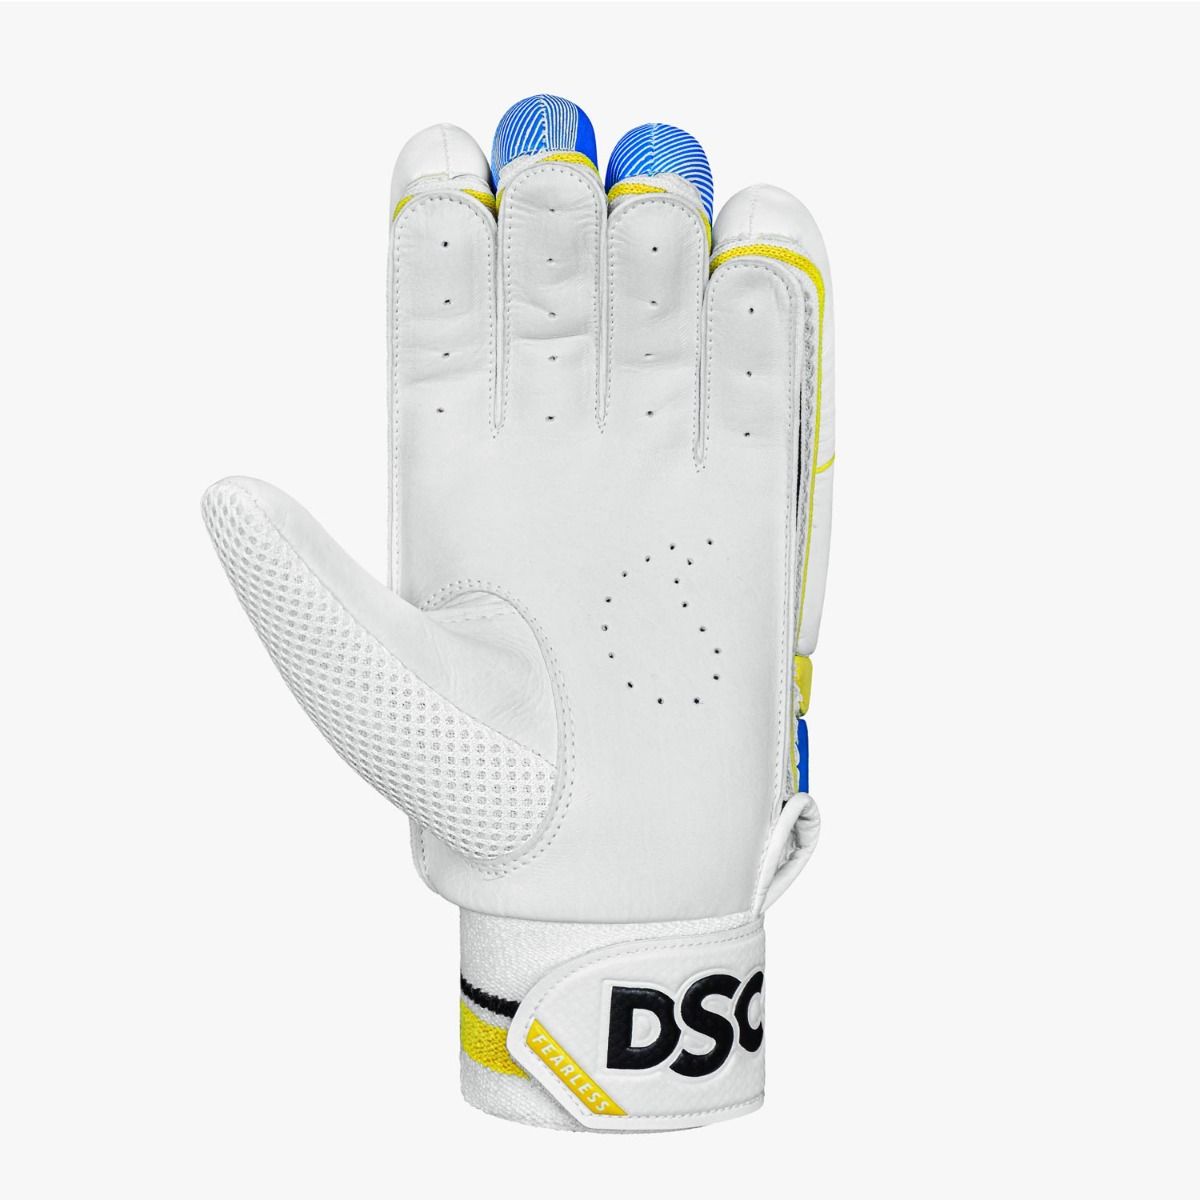 DSC Batting Gloves Condor Motion Batting Gloves